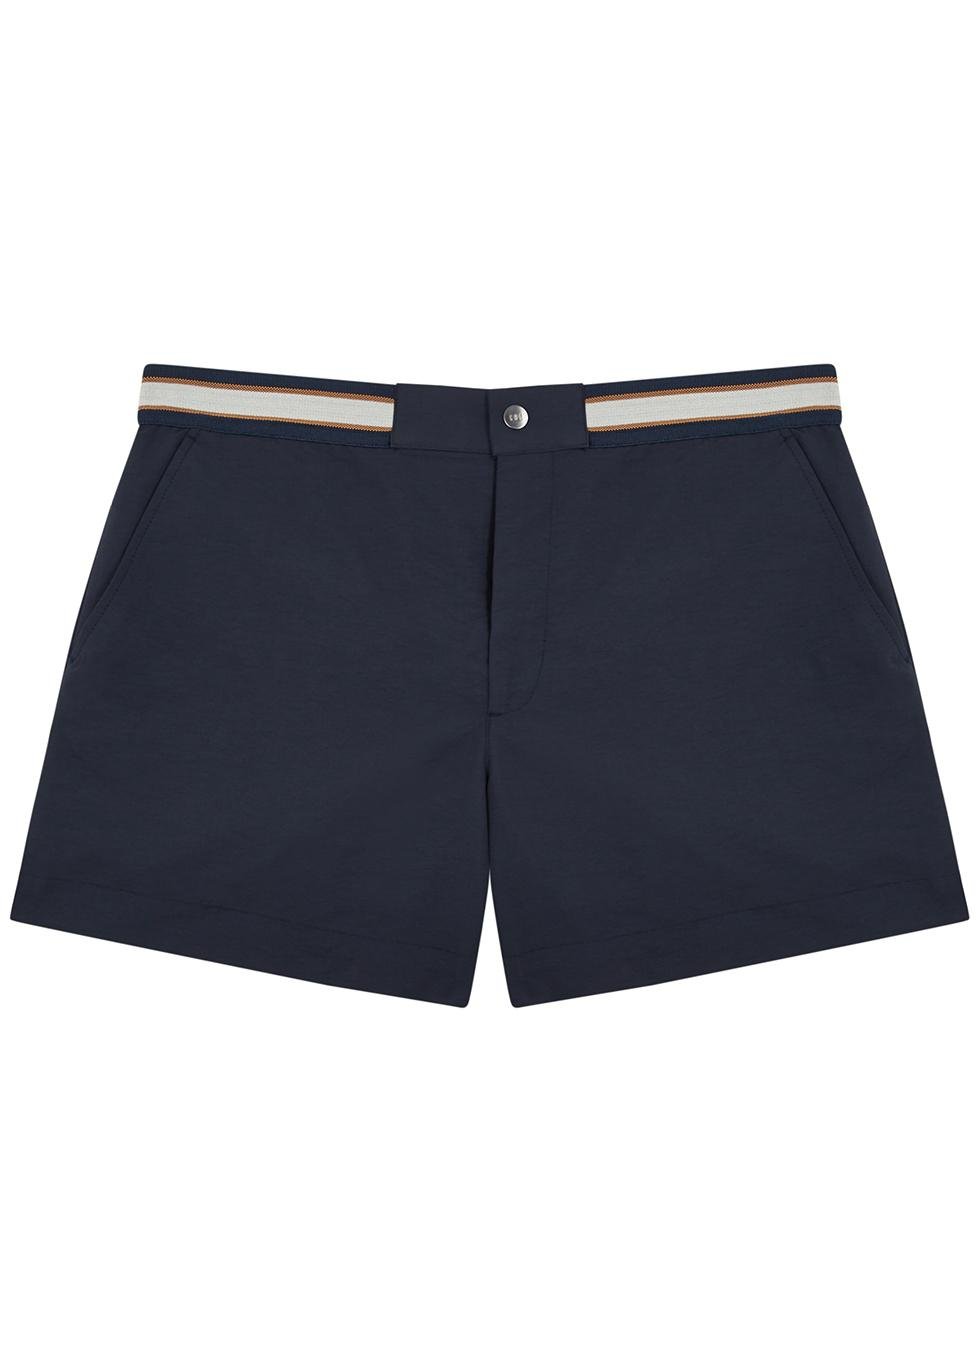 Sunseeker navy swim shorts by CHE